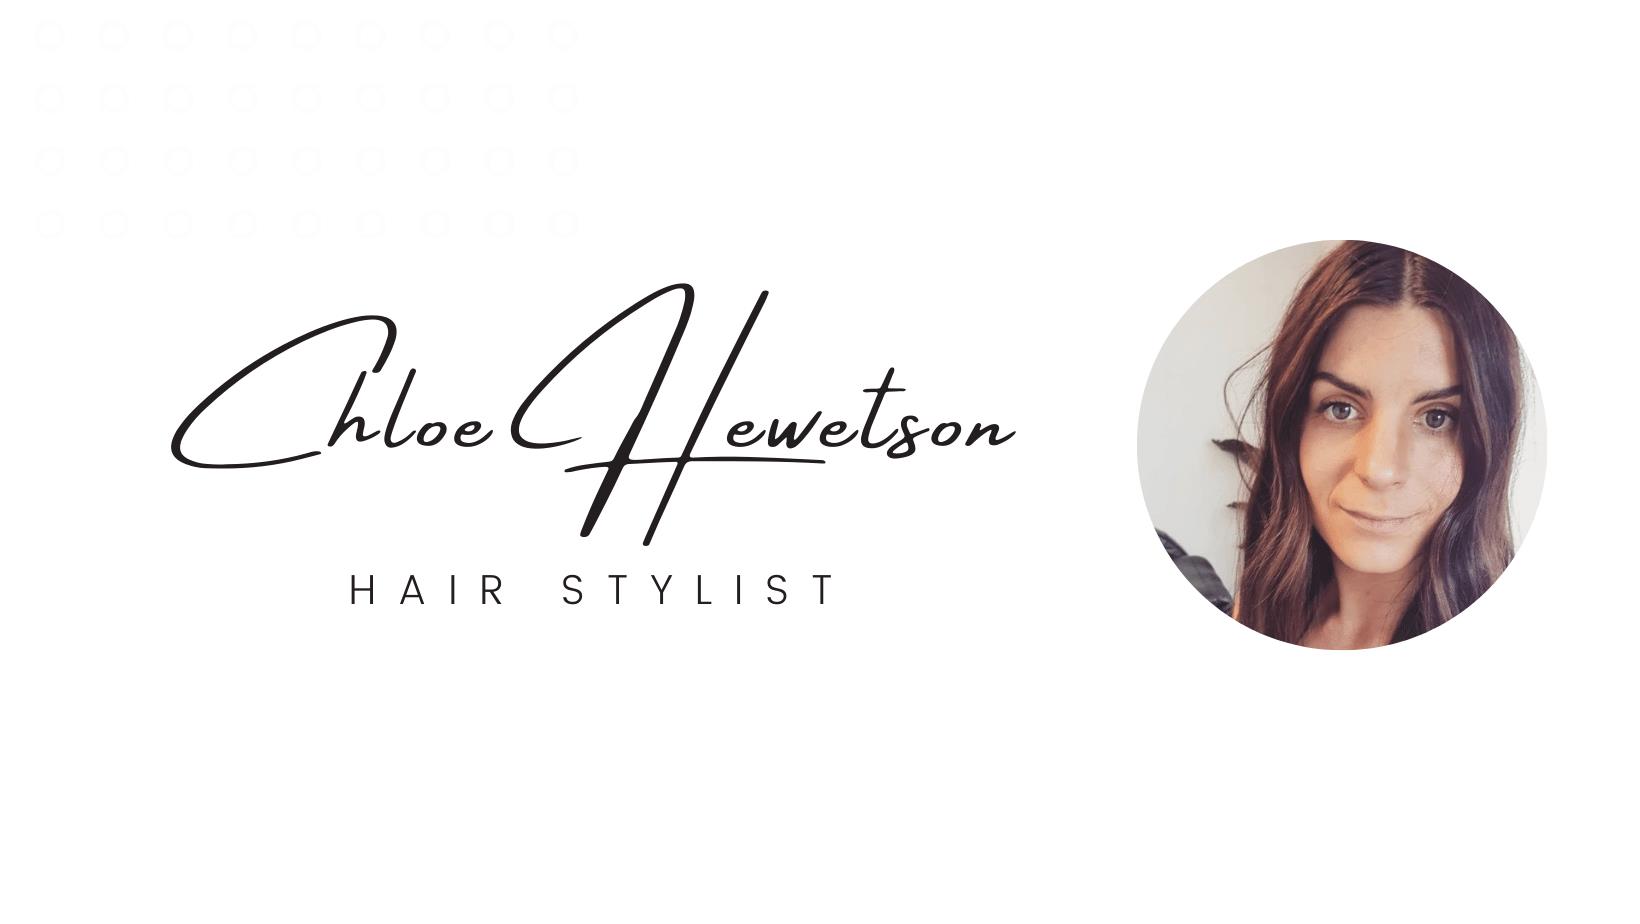 Chloe Hewetson Hair Stylist